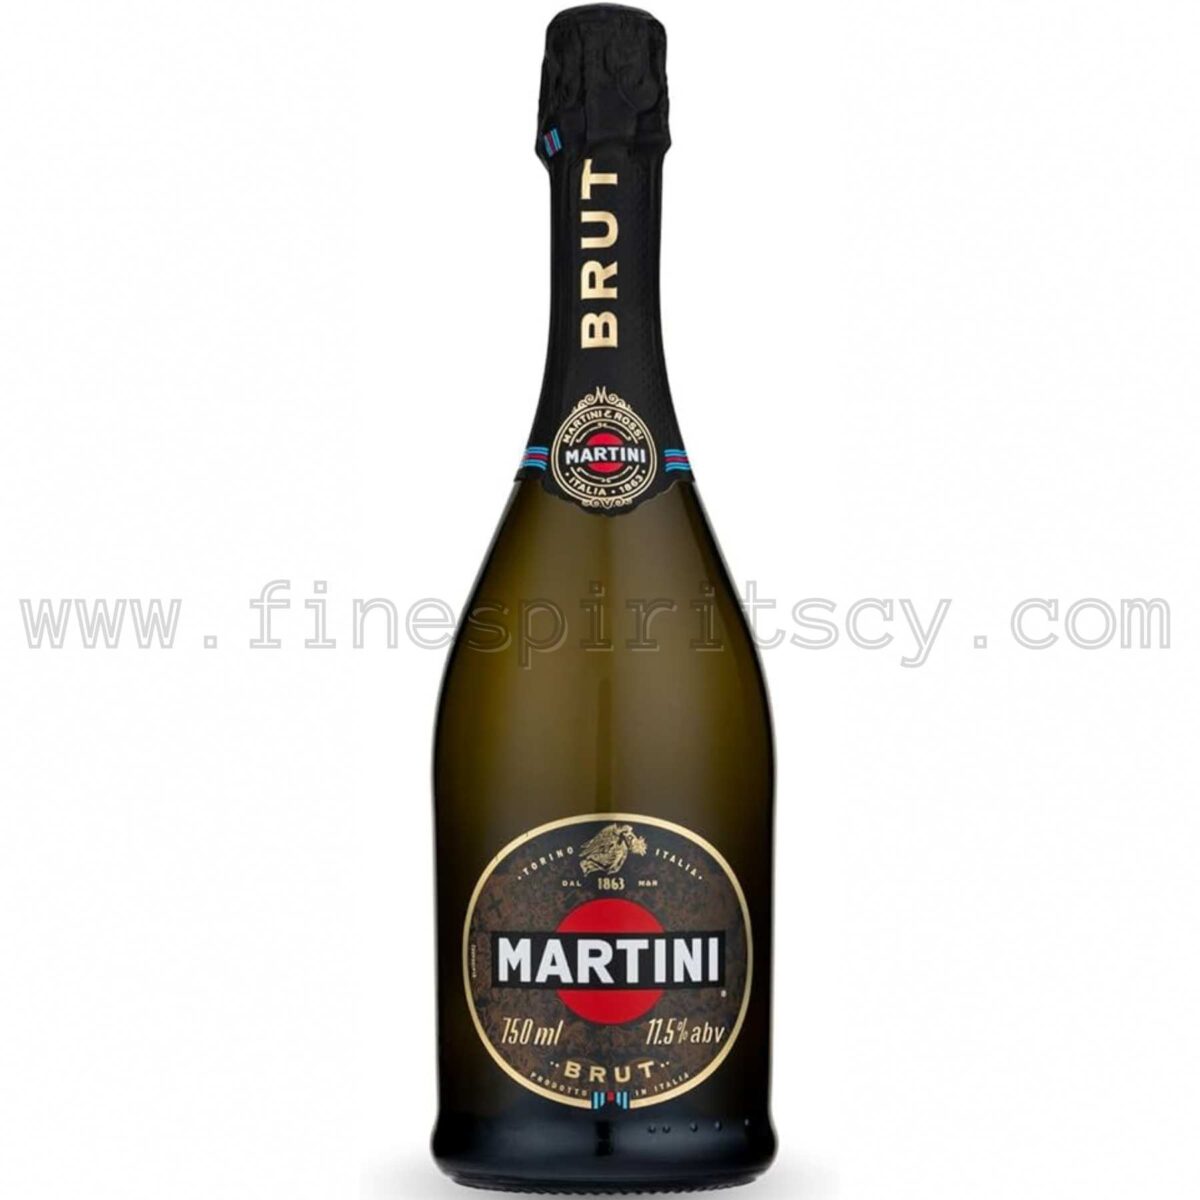 Martini Brut CY 75cl 0.75L Cyprus Wine Price Online Sparkling Order Buy 750ml